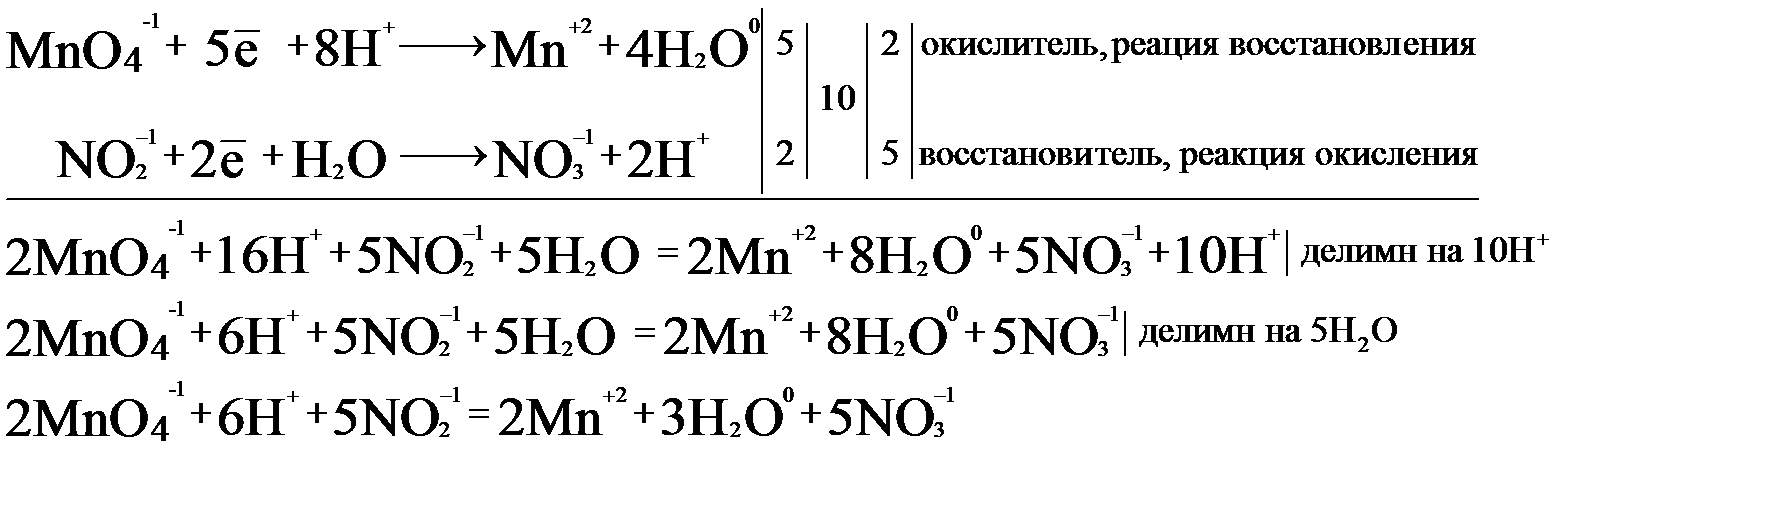 Nano2 ОВР. Электронно ионный метод ОВР. ОВР ZN+h2so4 znso4+h2s+h2o. ZN+h2so4 ОВР.